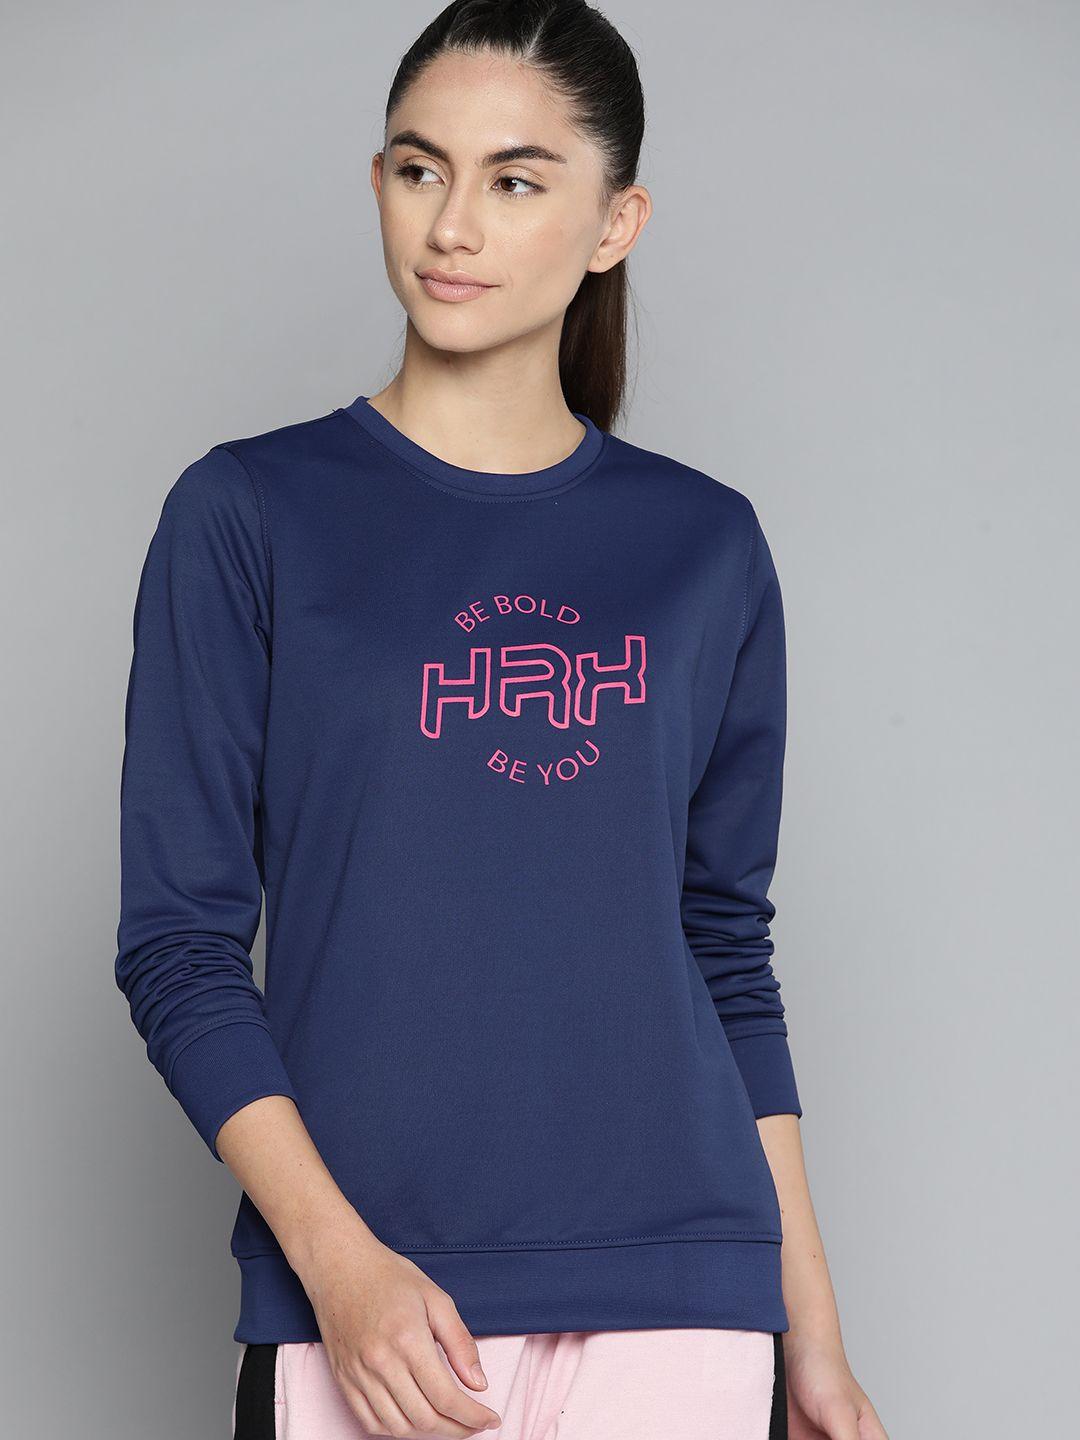 hrx-by-hrithik-roshan-women-navy-blue-&-pink-brand-logo-printed-sweatshirt